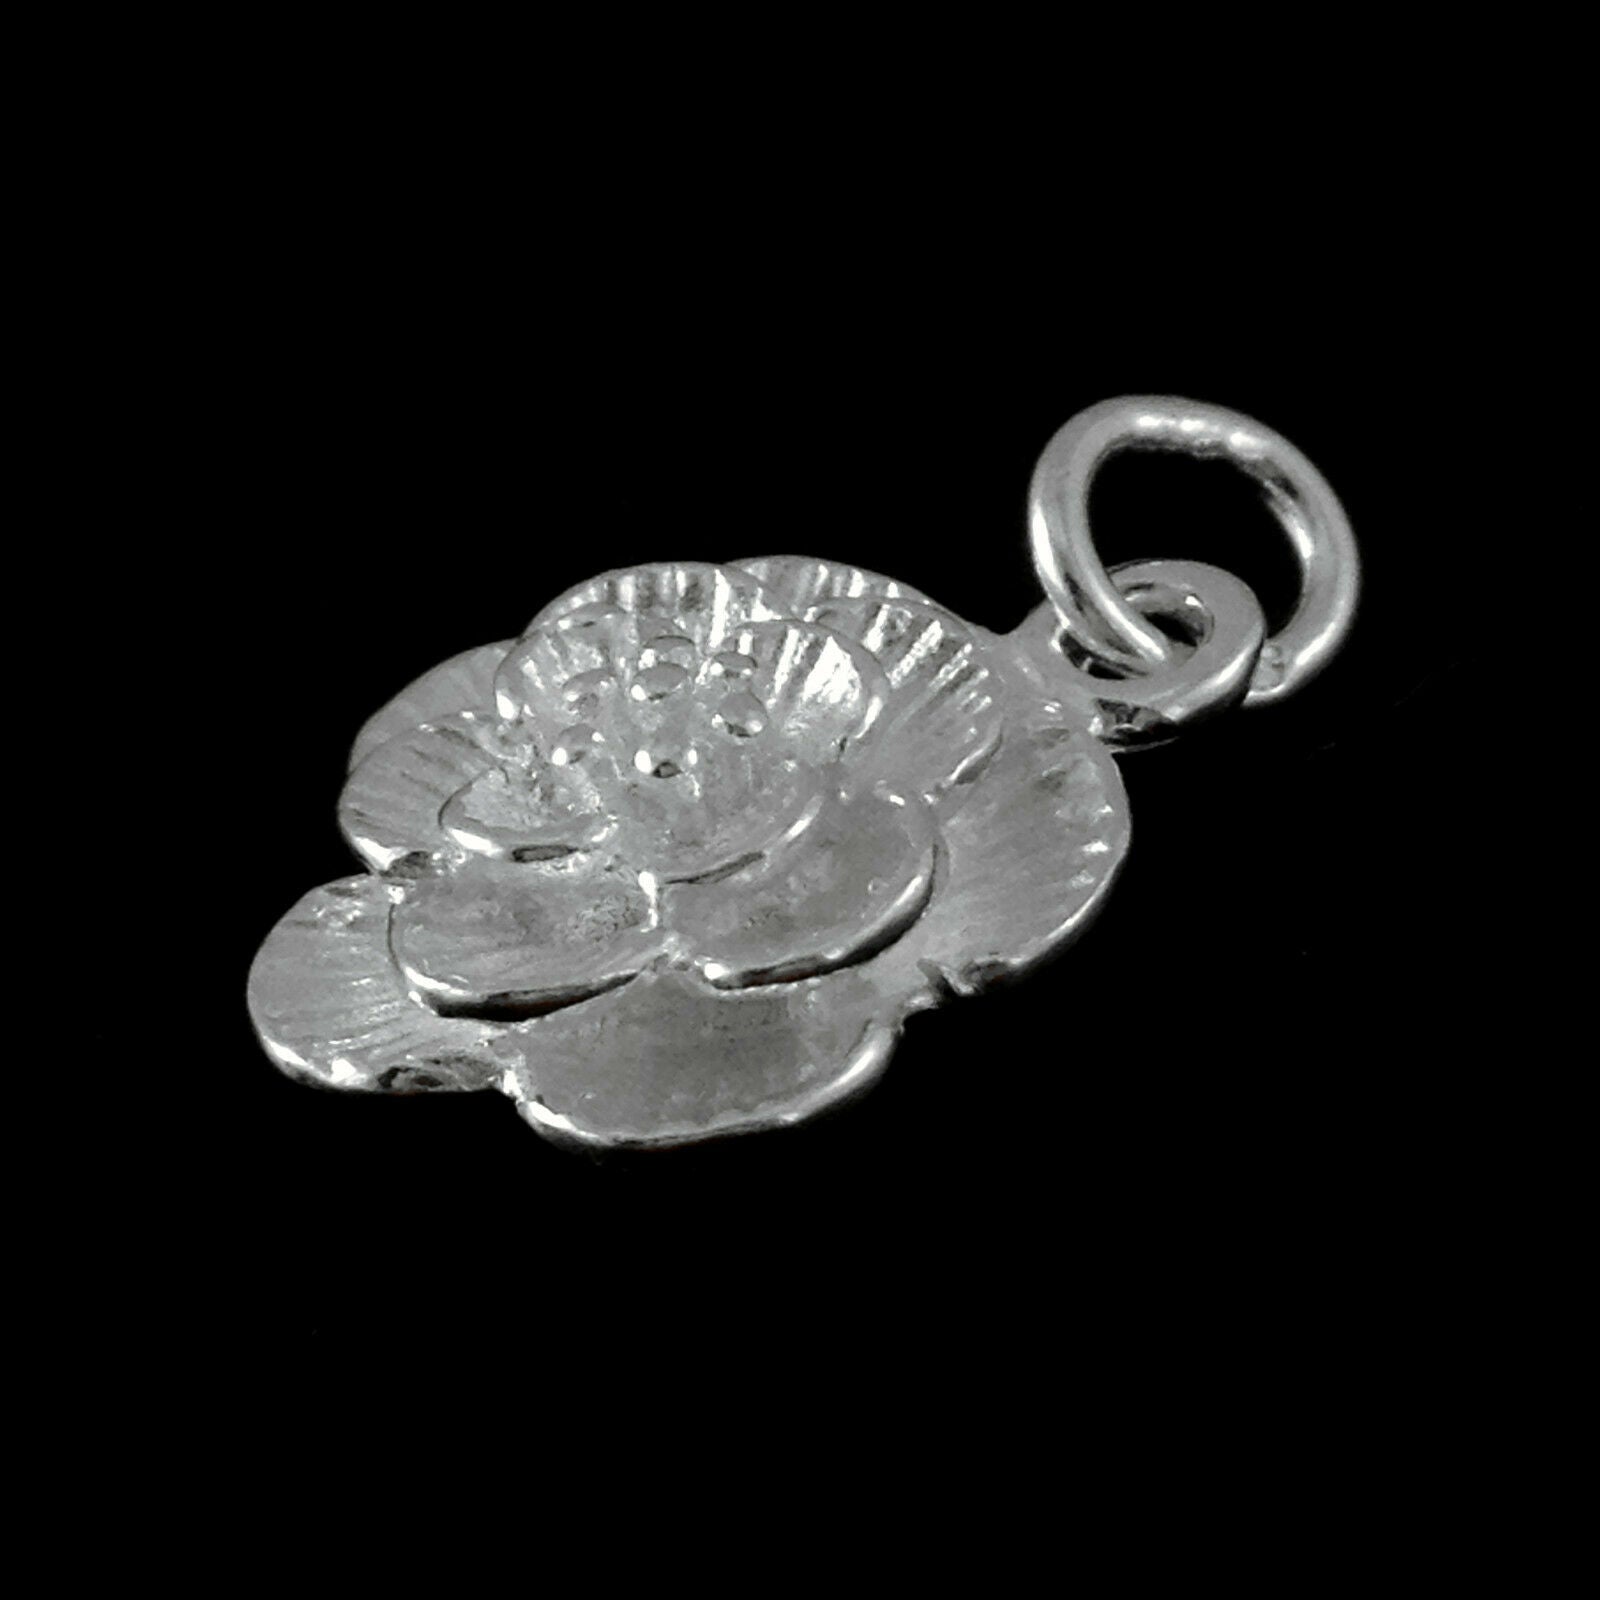 Sterling Silver Cherry Peach Lotus Flower Necklace Bracelet Pendant Charm - sugarkittenlondon